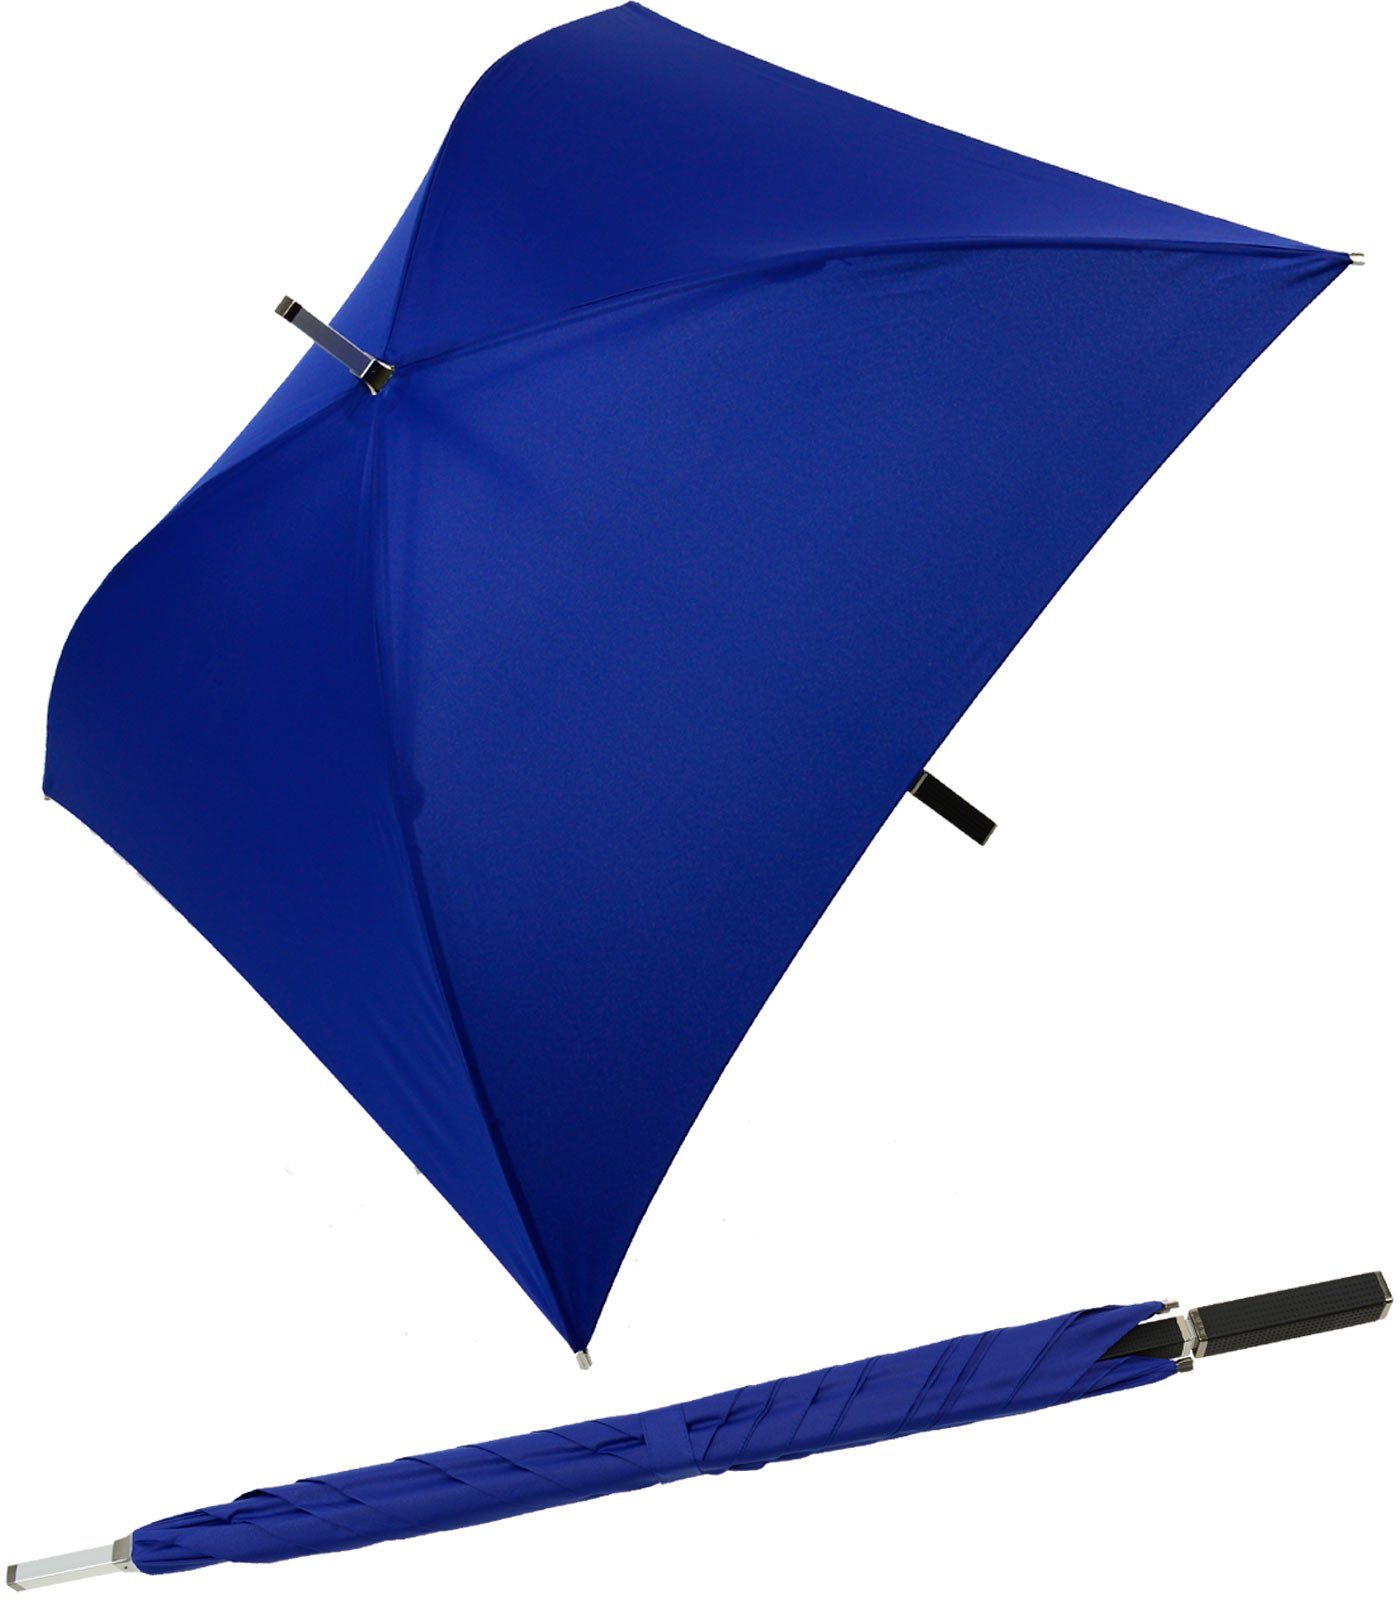 Impliva Langregenschirm All Square® voll der Regenschirm, Regenschirm ganz quadratischer blau besondere